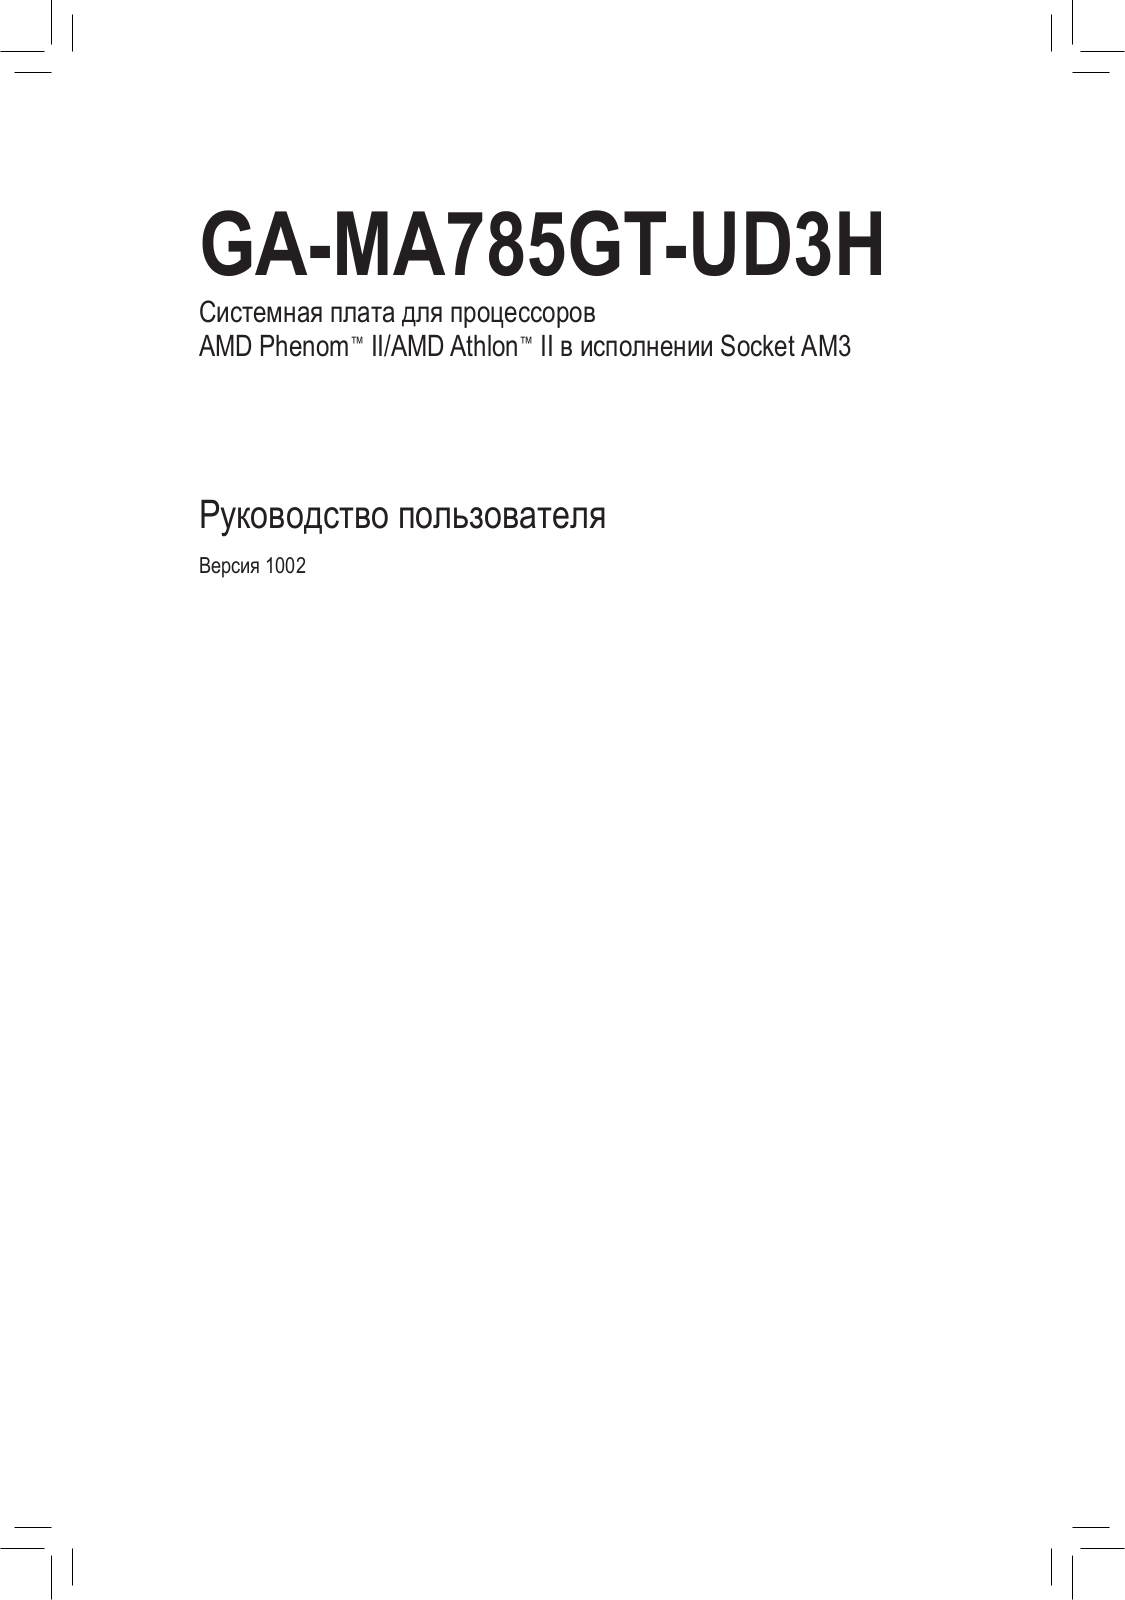 Gigabyte GA-MA785GT-UD3H (rev.1.1), GA-MA785GT-UD3H (rev.1.3), GA-MA785GT-UD3H (rev.1.0) User Manual